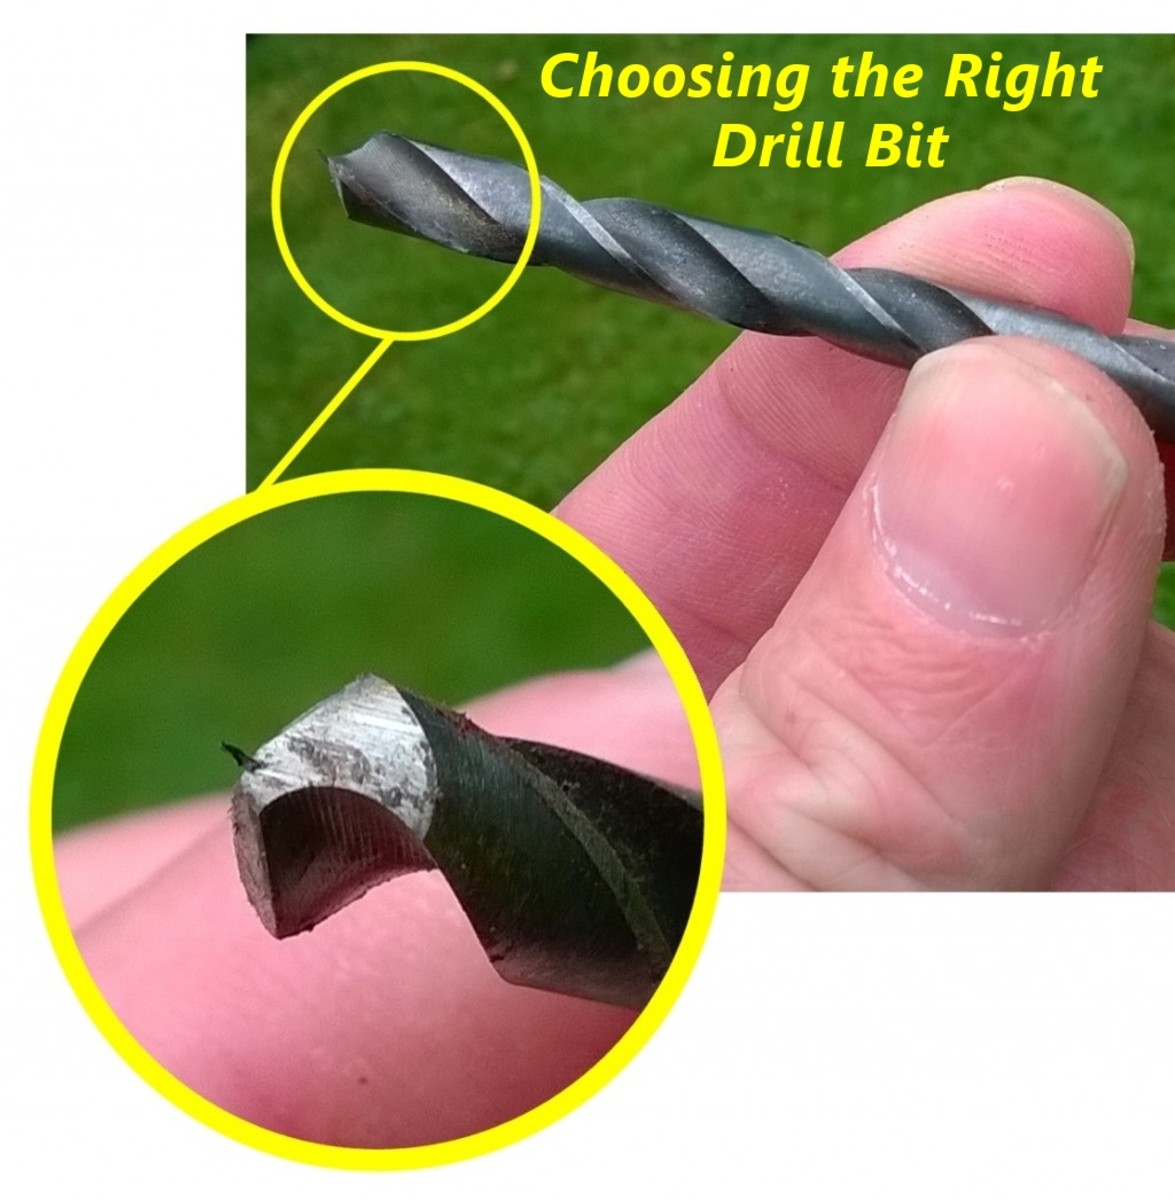 A HSS drill bit for drilling steel